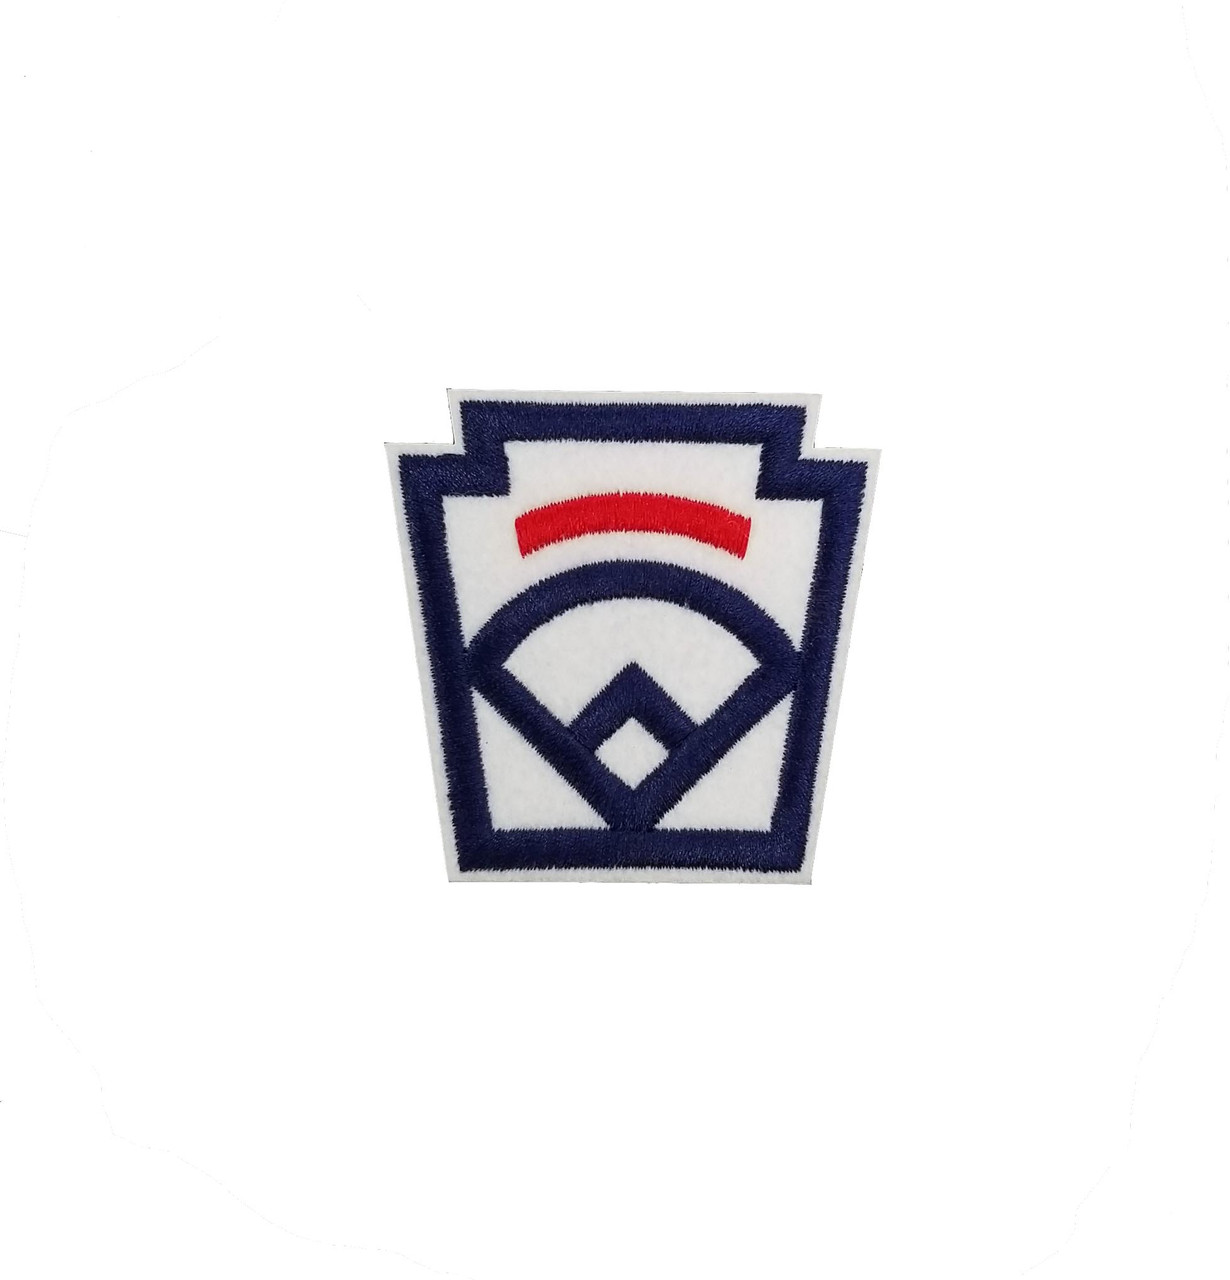 little league baseball patch placement｜TikTok Search